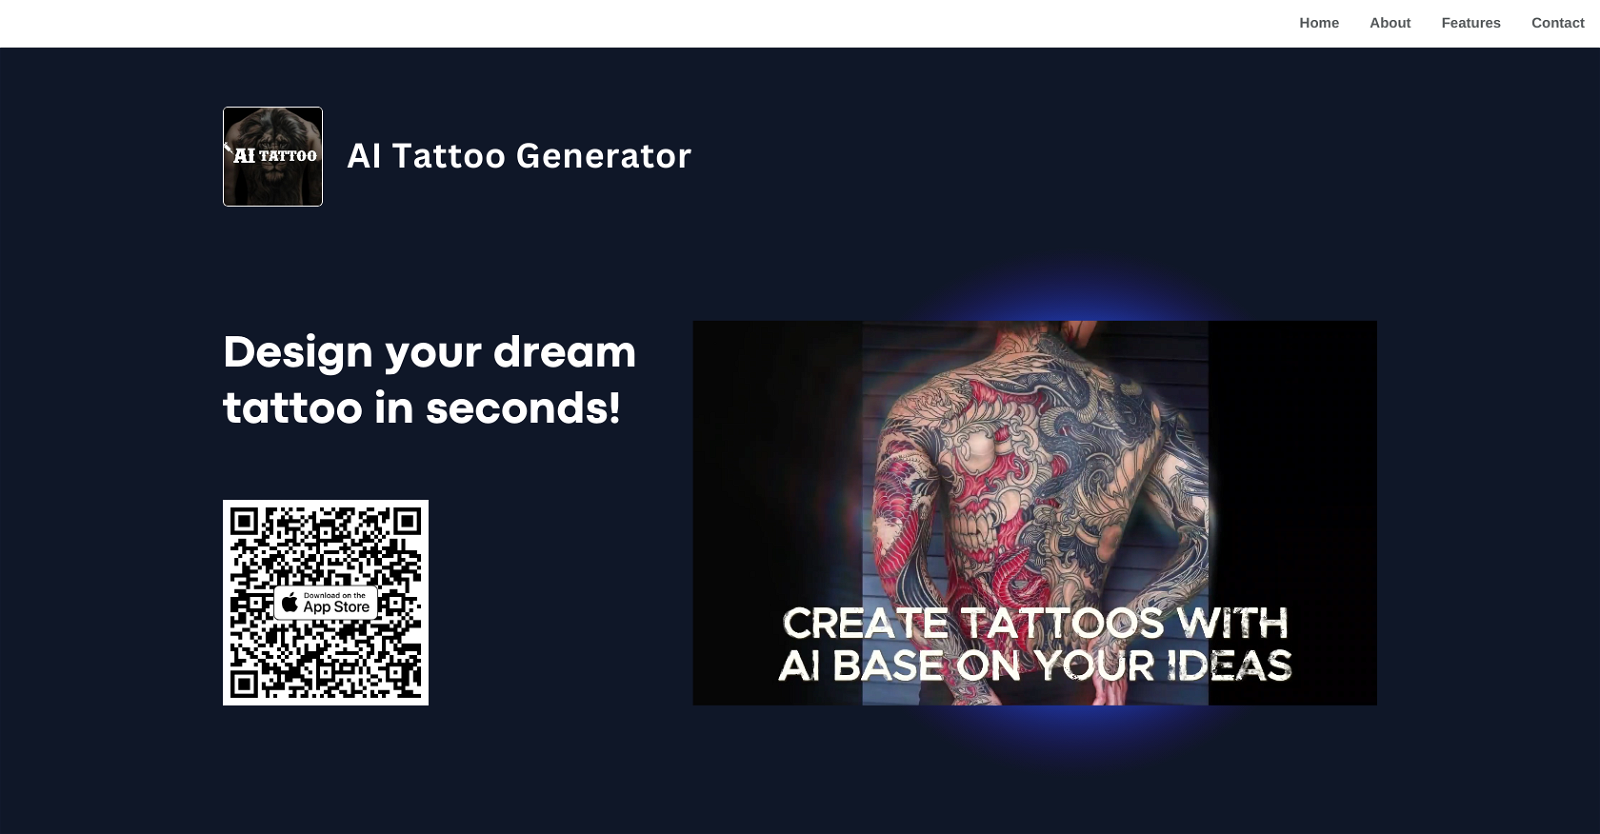 Best AI Tattoo, AI Tattoo Generator AI Tattoos looking for testers - Beta  Family